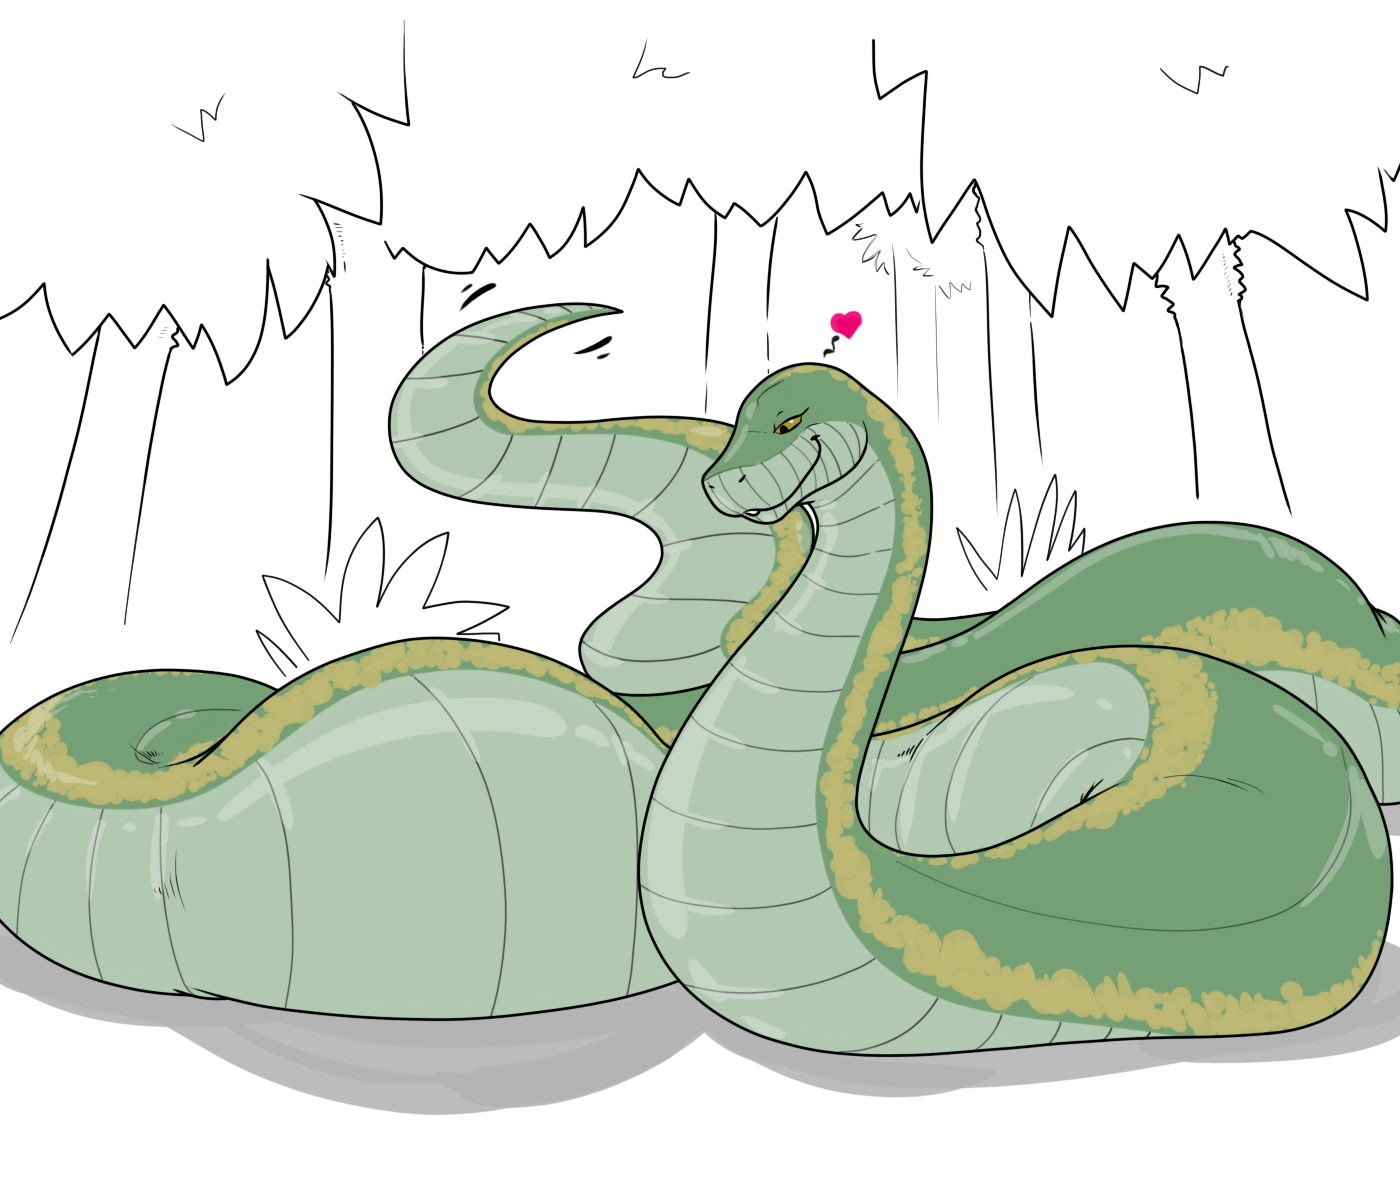 Snake vore Serpentine Serenaded;